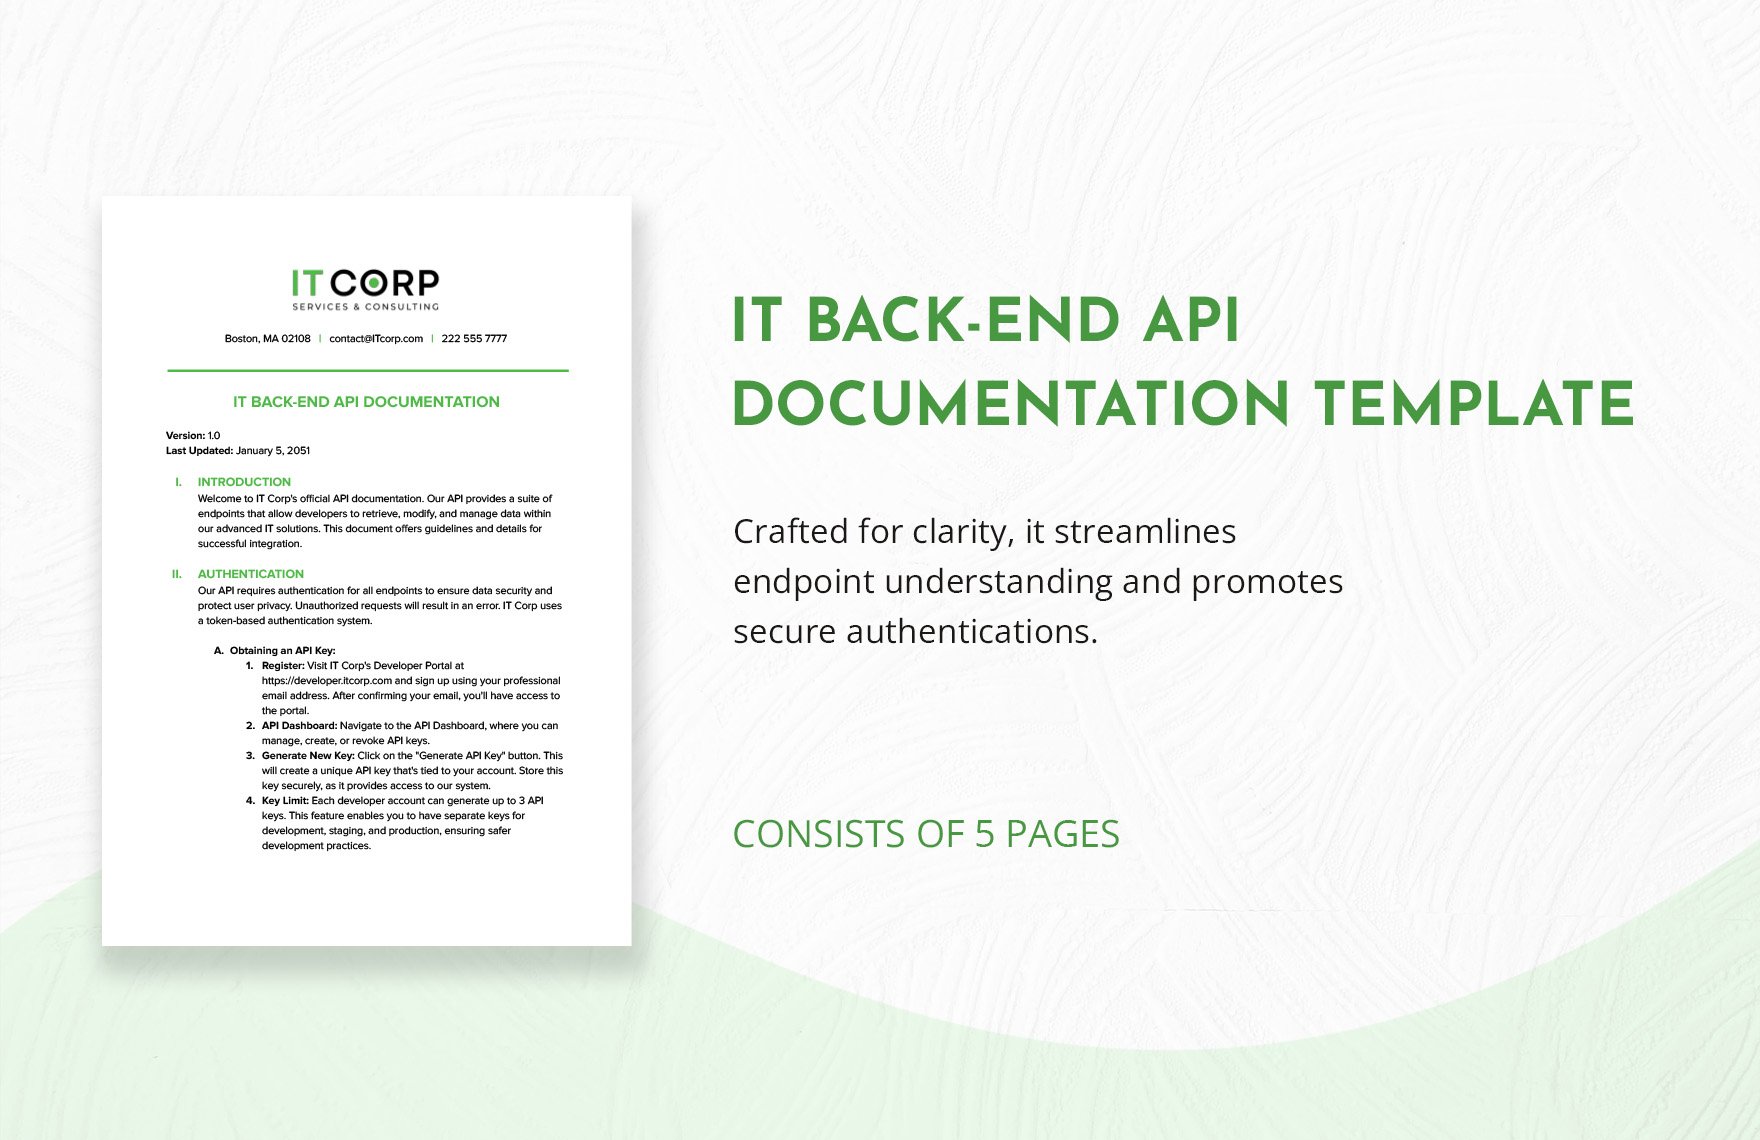 IT Back-End API Documentation Template